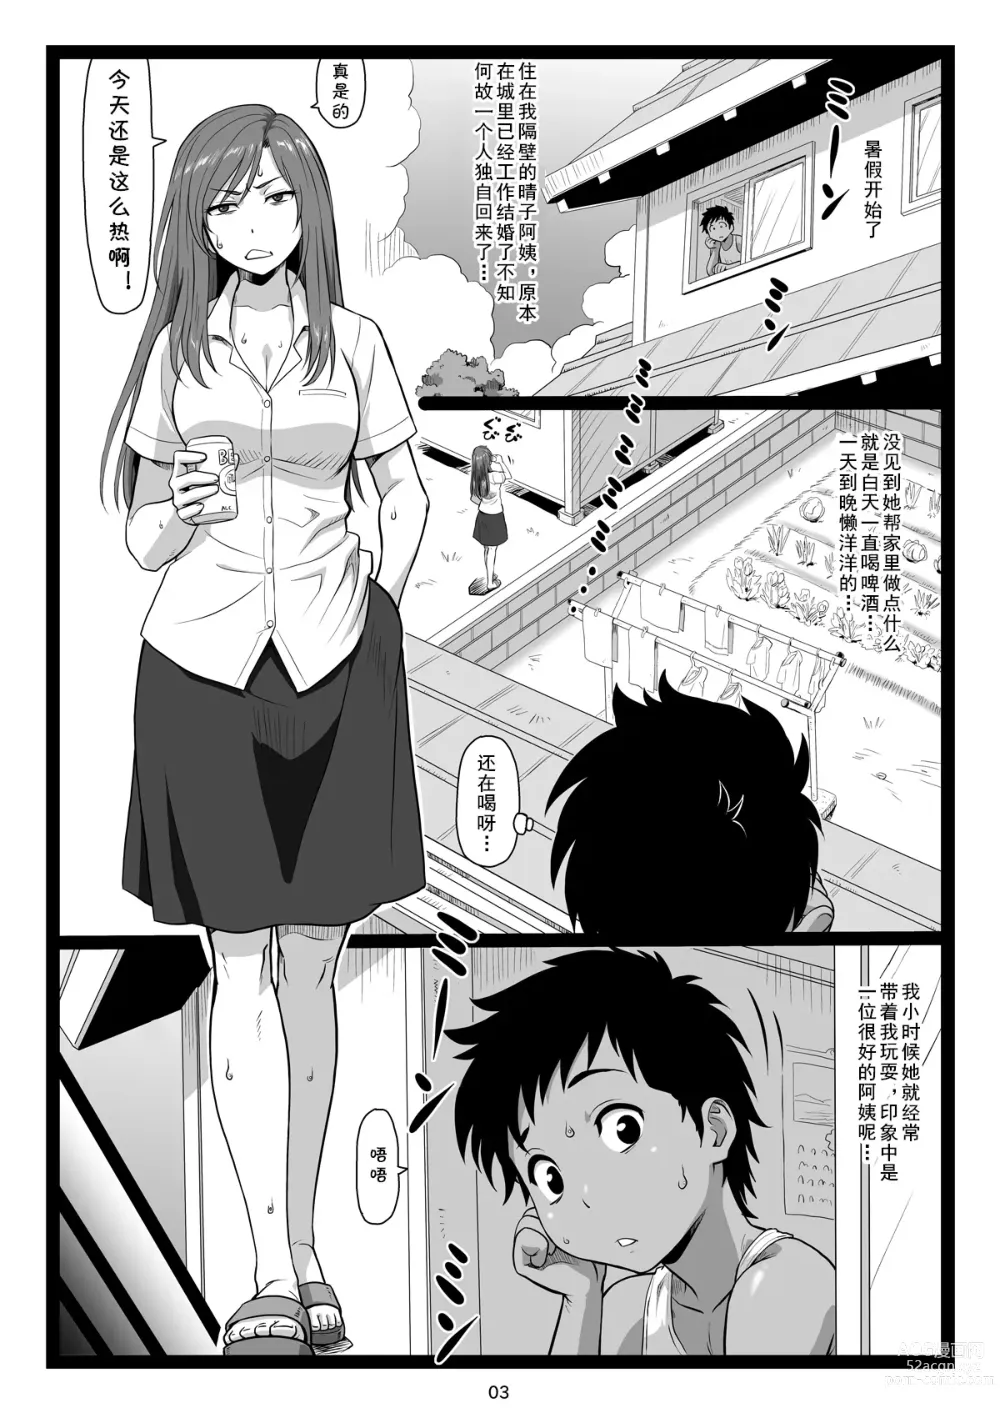 Page 3 of doujinshi Natsuyasumi no Omoide Joukan